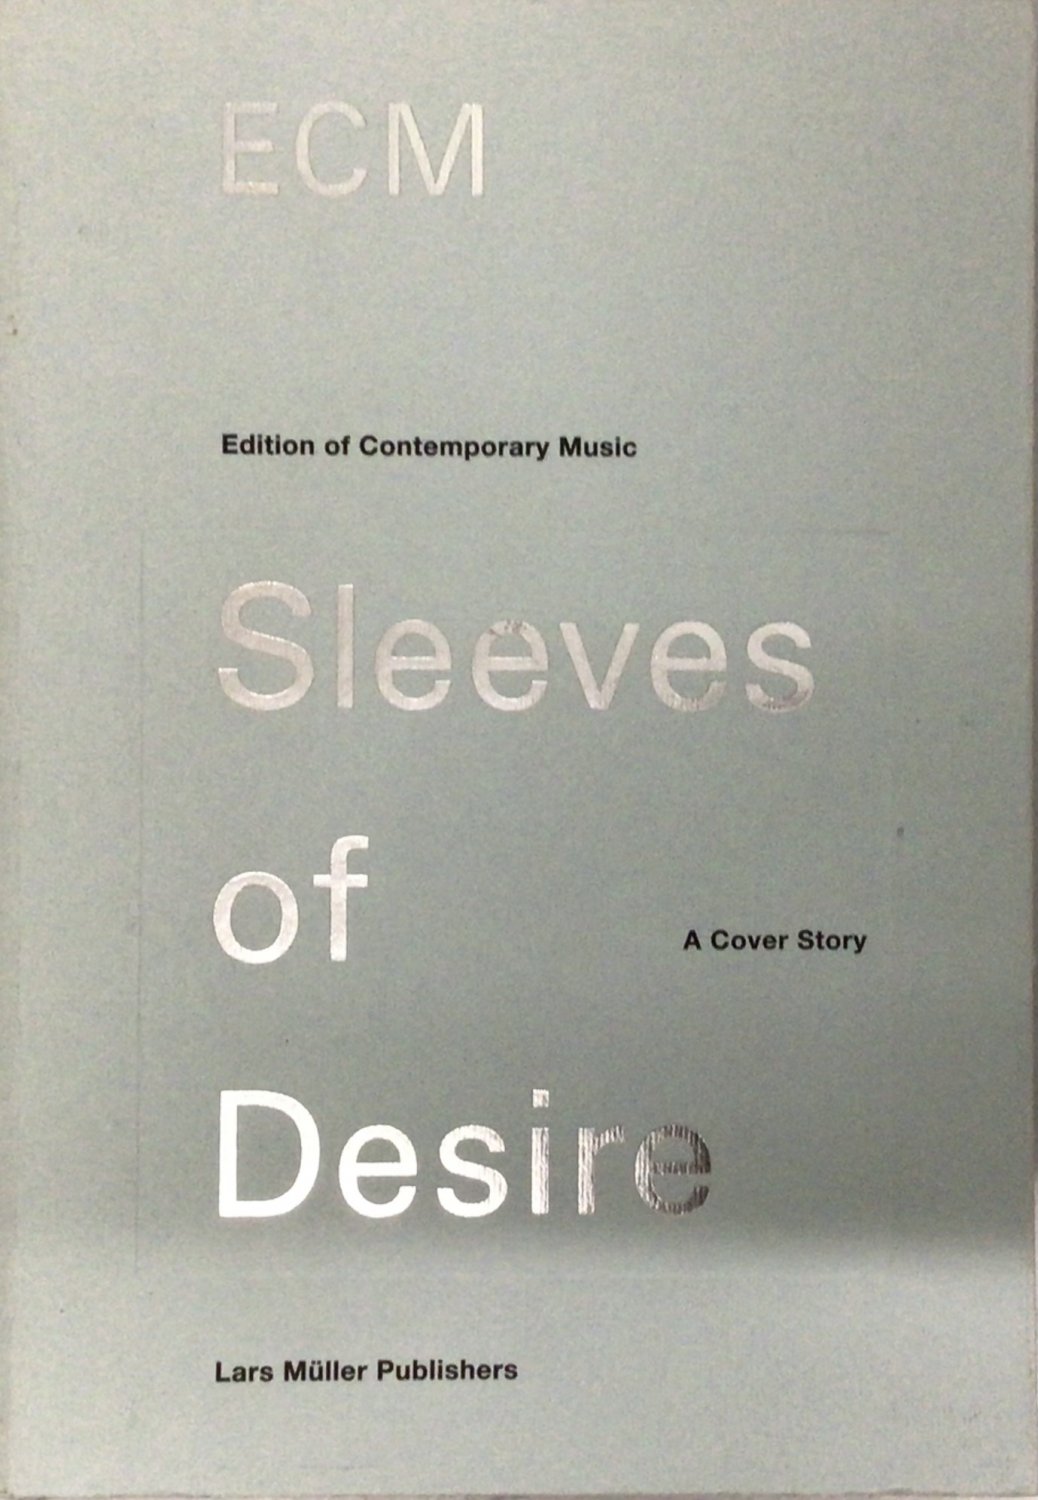 ECM - Sleeves of Desire.“ – Bücher gebraucht, antiquarisch & neu